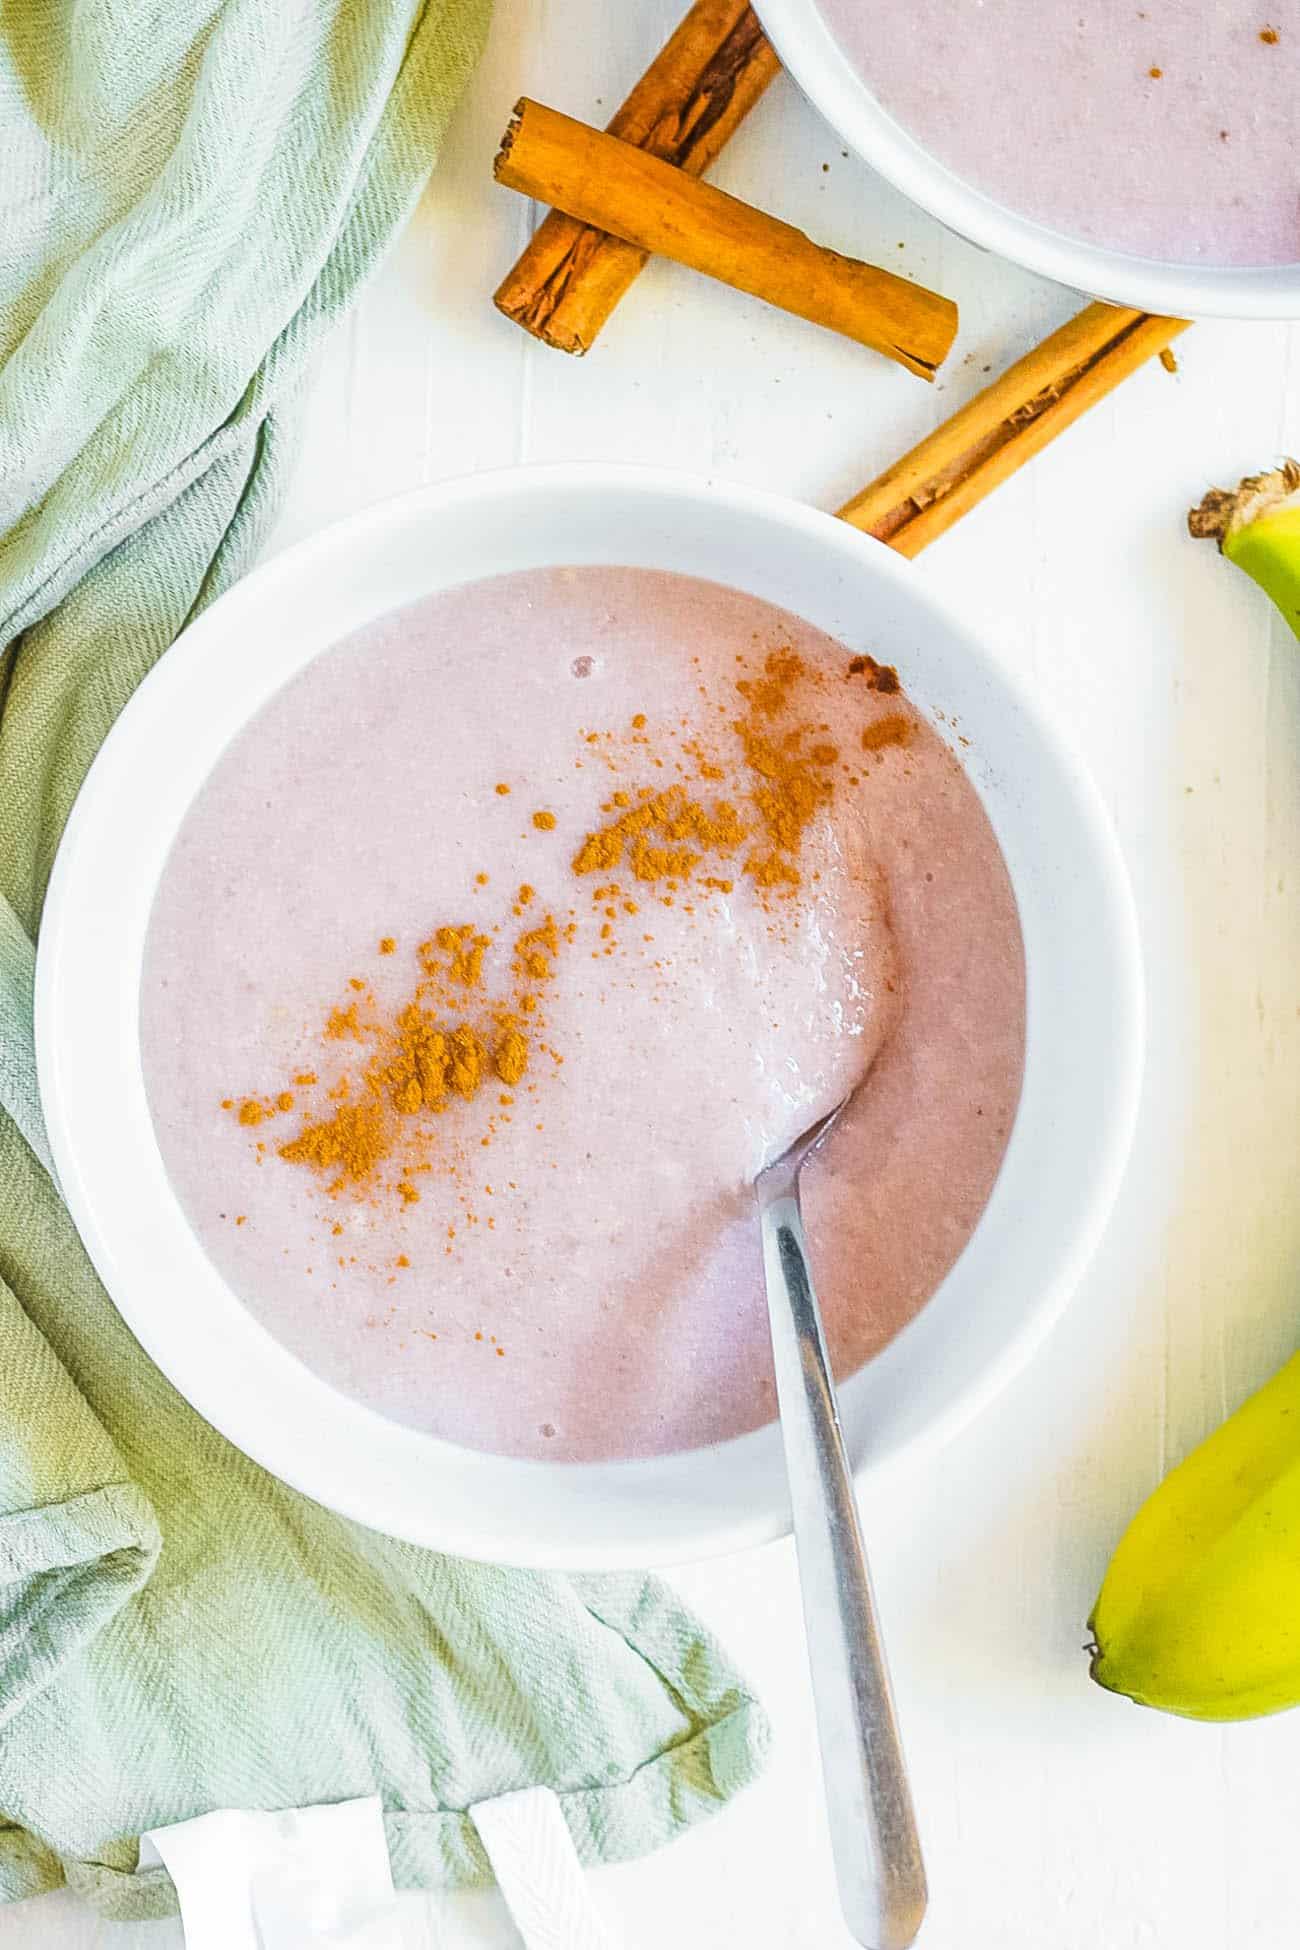 healthy easy vegan gluten free jamaican banana porridge recipe with cinnamon in a white bowl